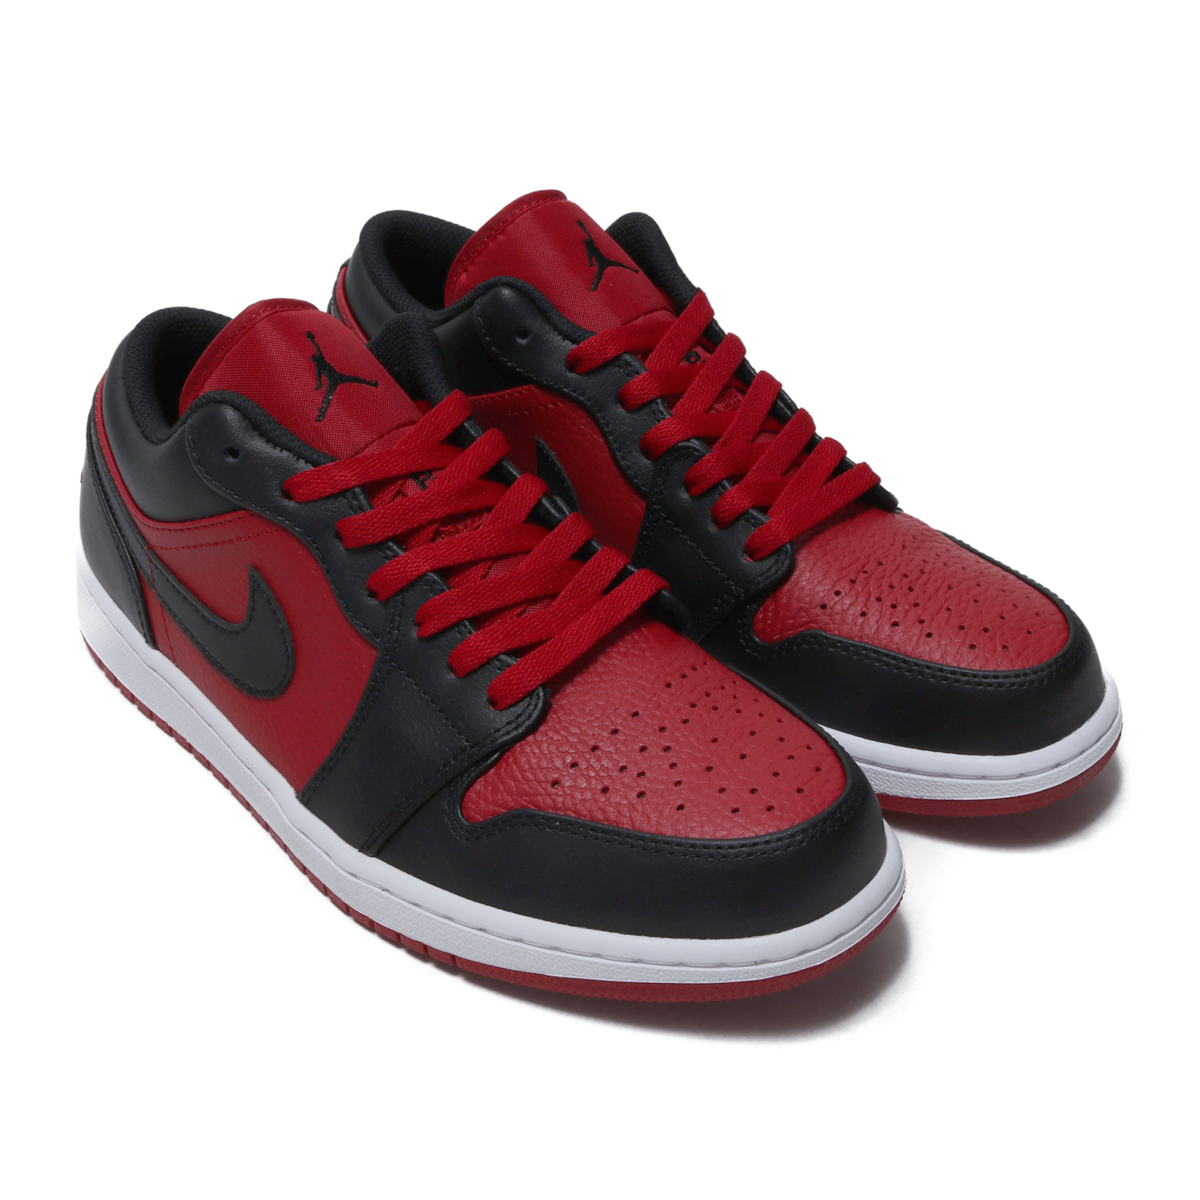 Джорданы кроссовки низкие. Nike Air Jordan 1 Low Red. Nike Air Jordan 1 Low Red Black White. Nike Jordan 1 Low Red. Nike Air Jordan 1 Low Gym Red.